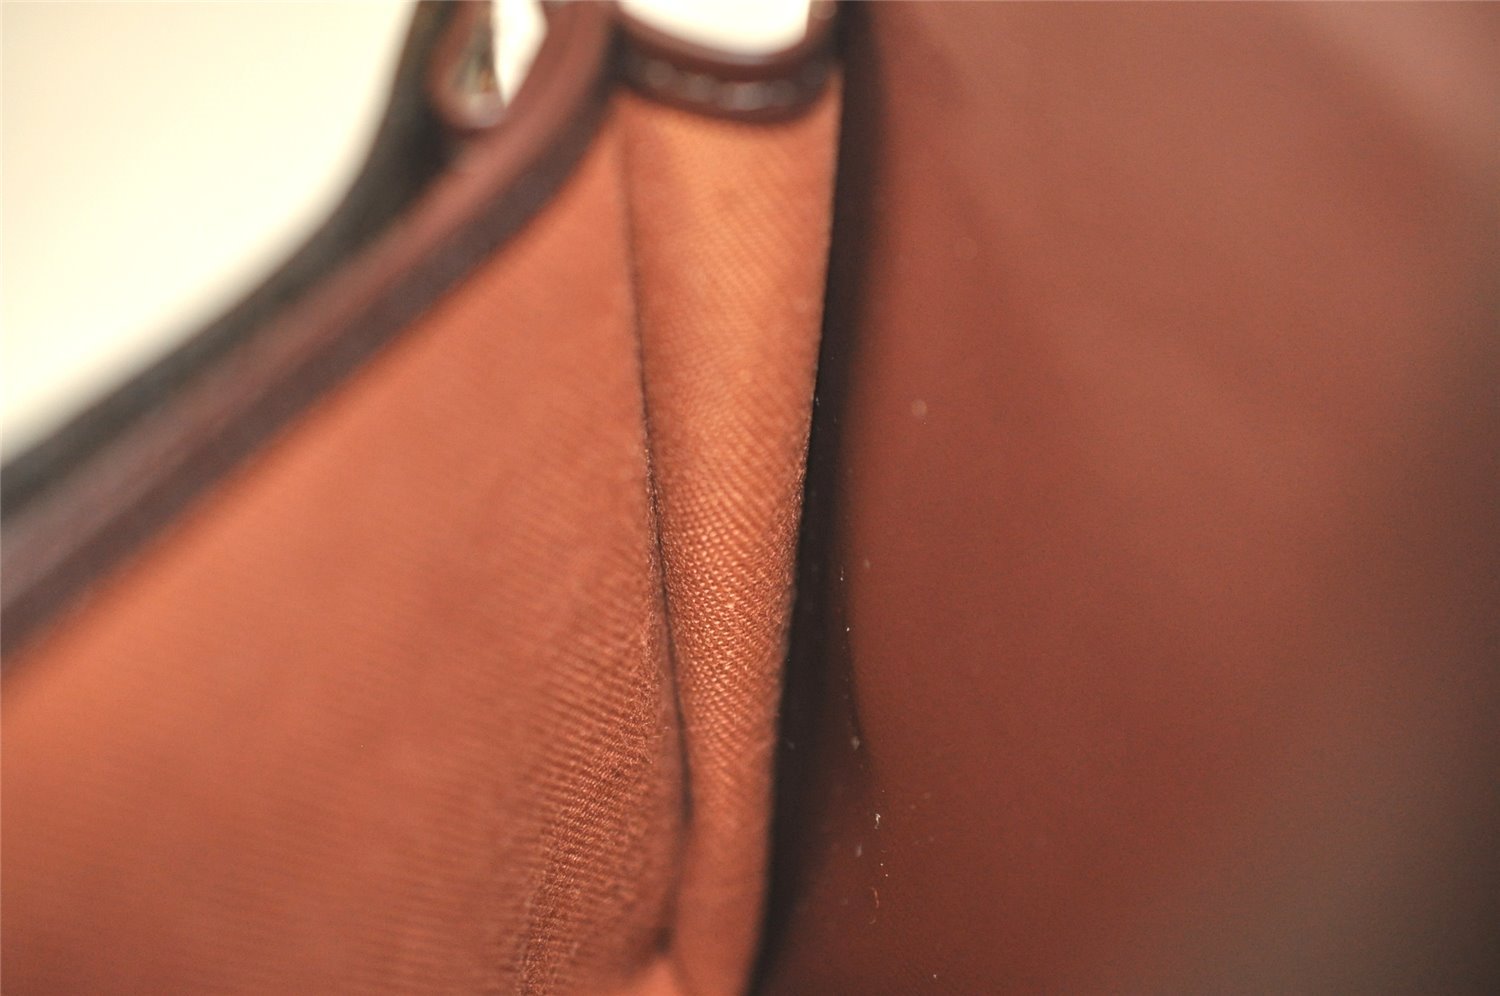 Authentic Burberrys Nova Check Clutch Hand Bag Canvas Leather Beige 1733I